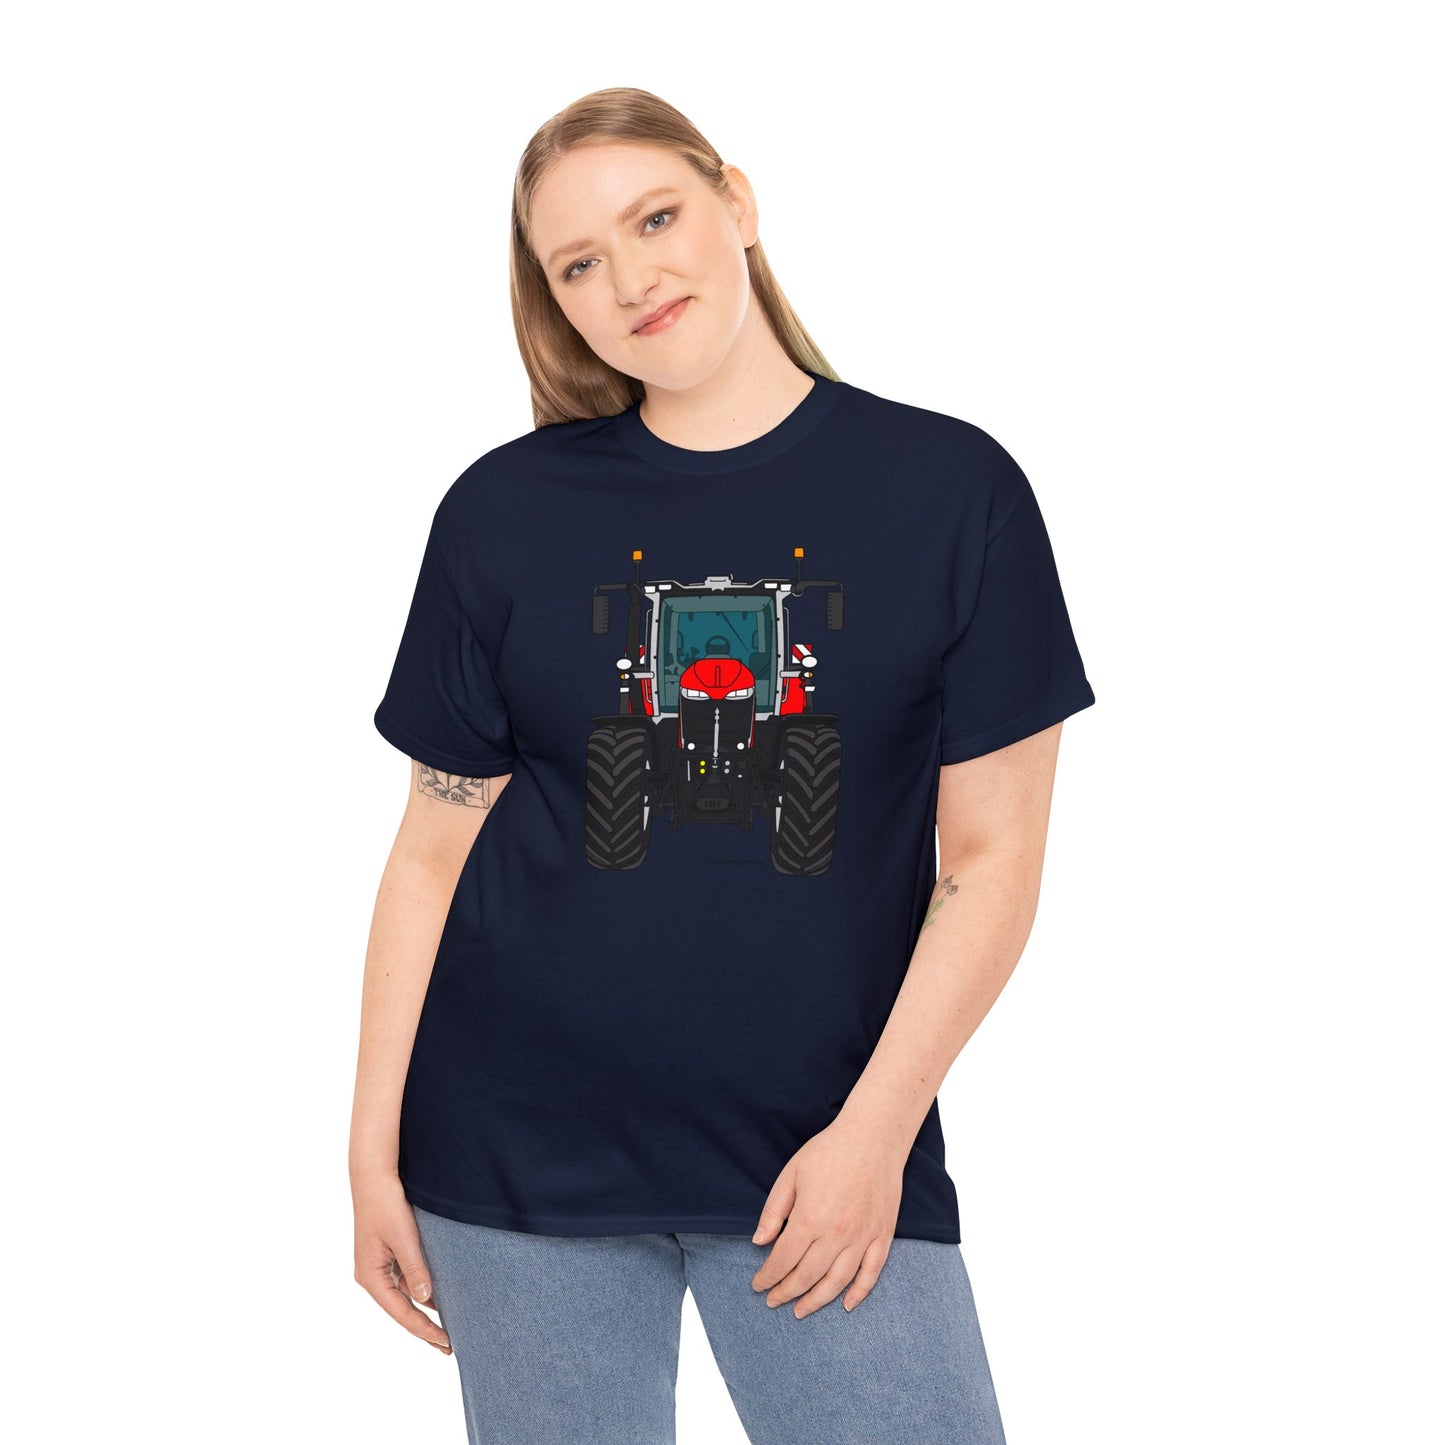 Massey Ferguson 8S Tractor - Adult Classic Fit Cartoon T-Shirt